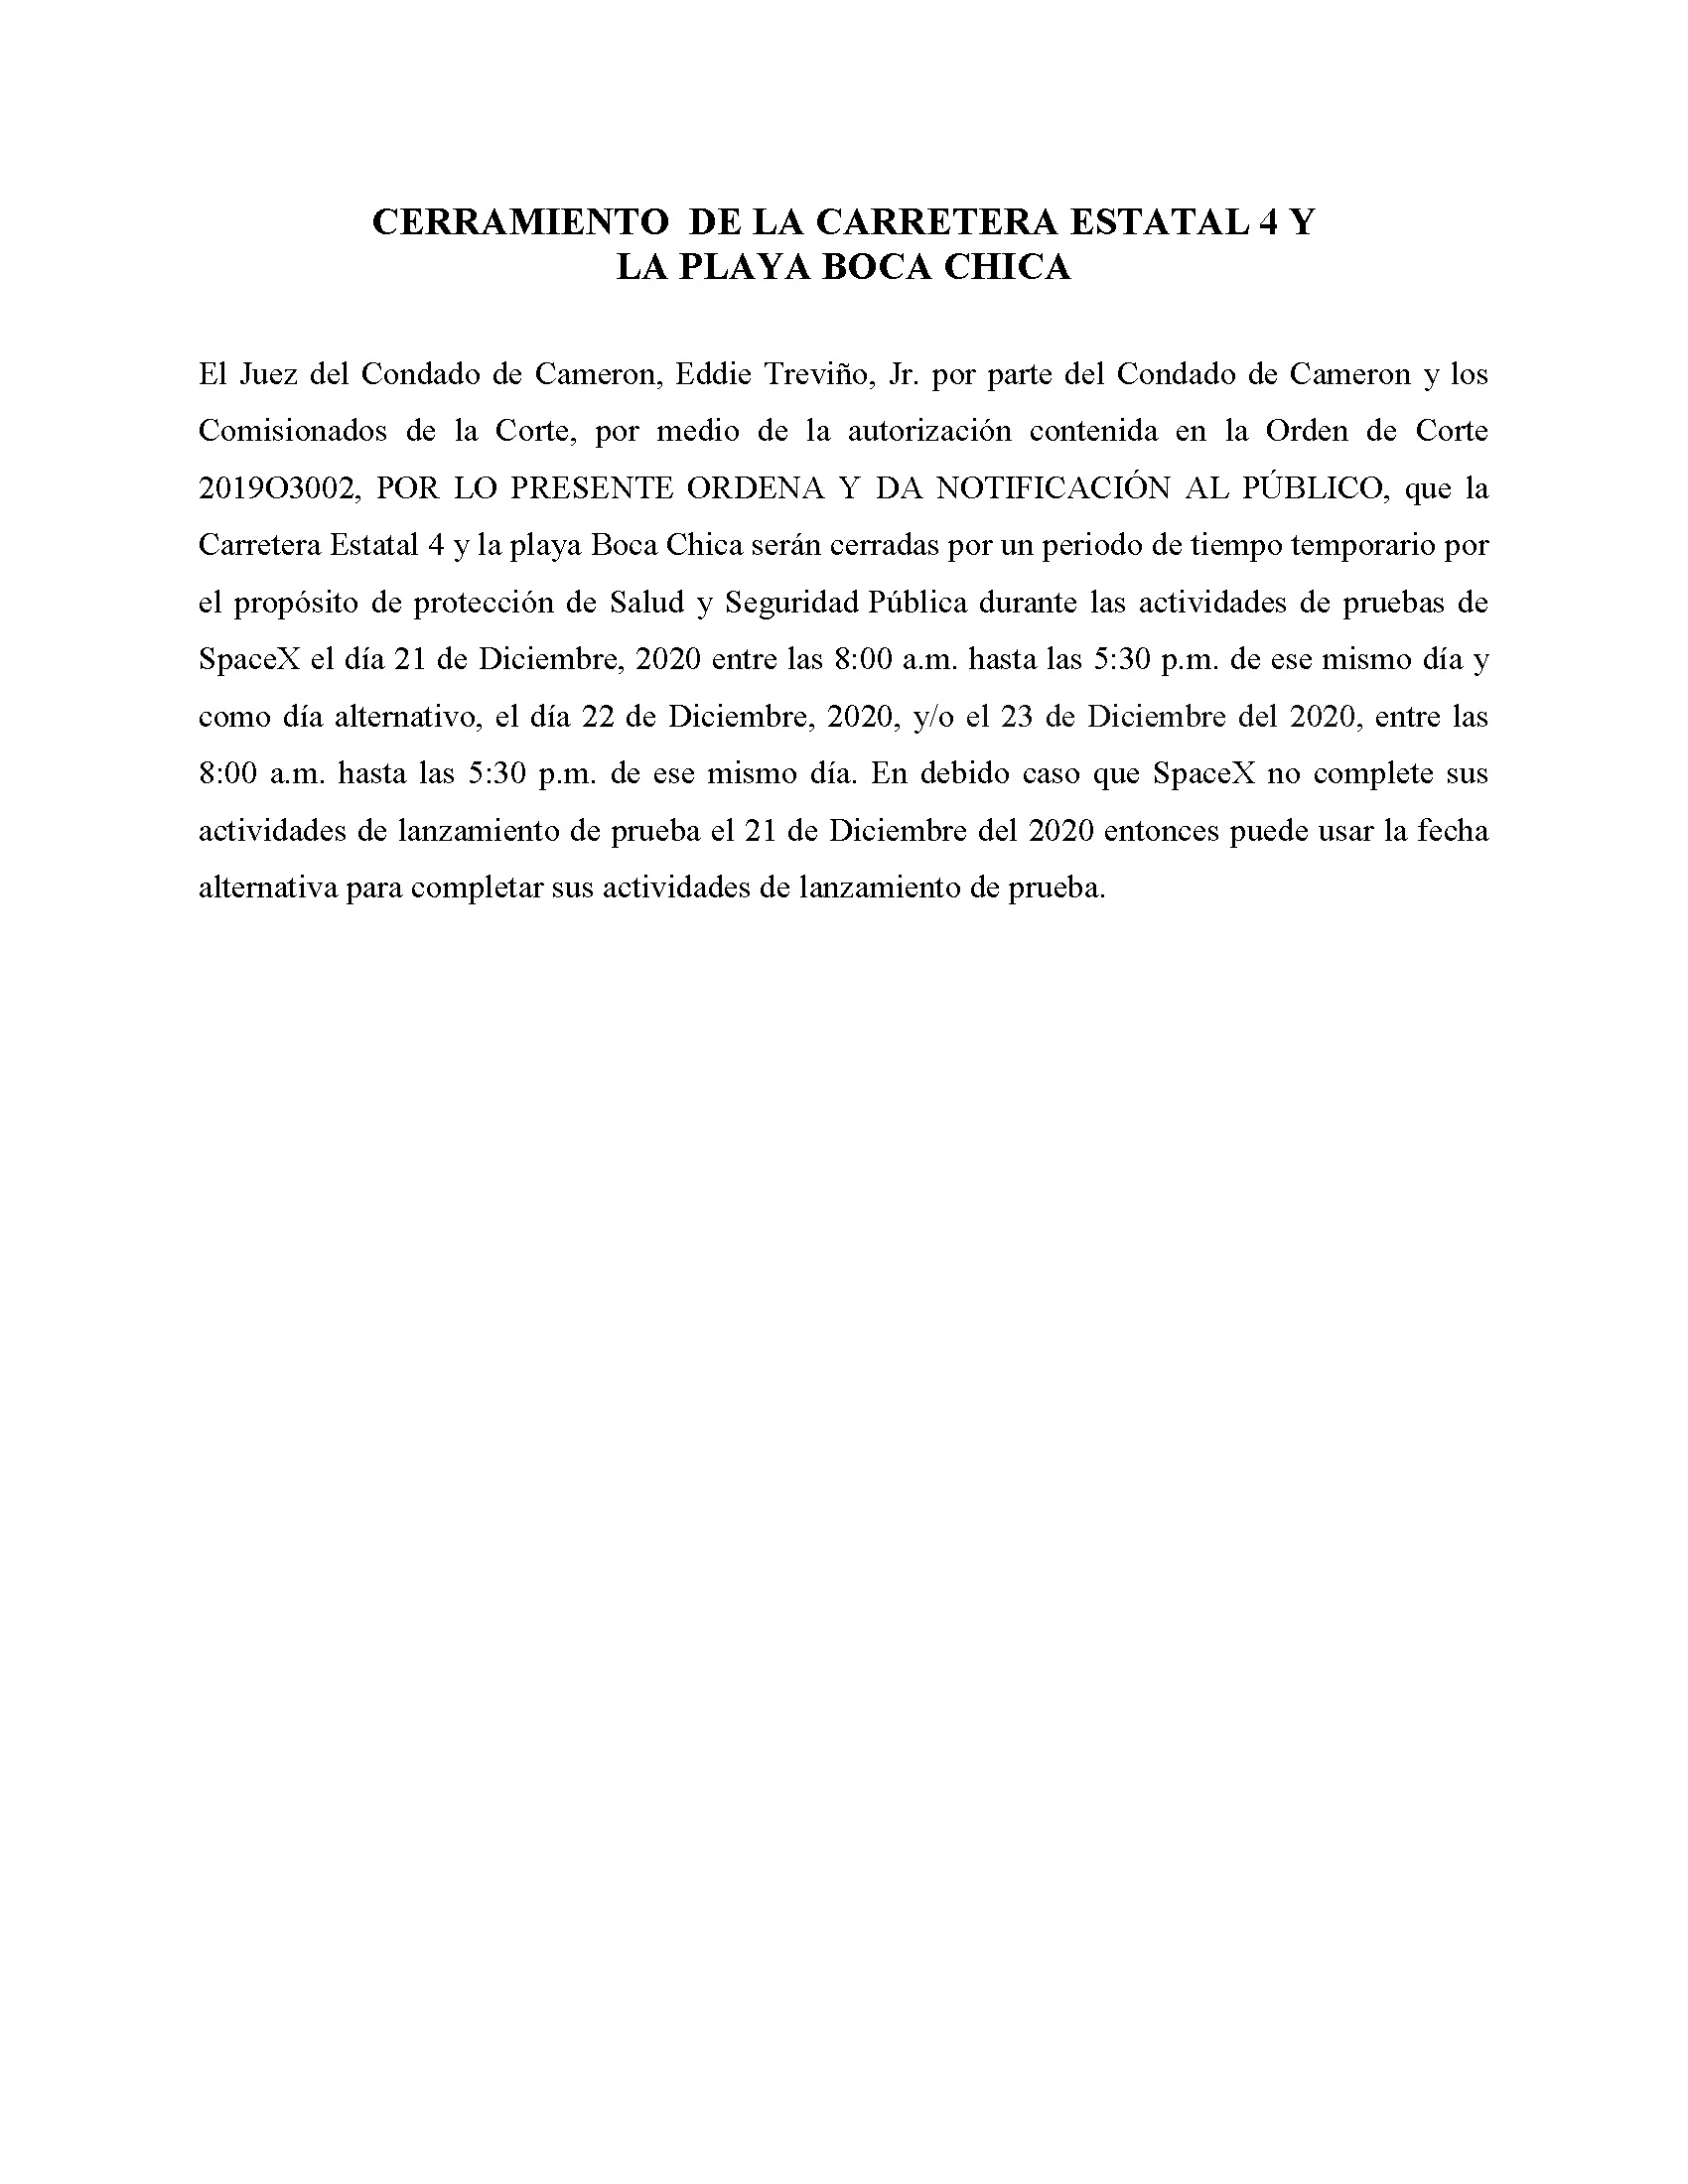 ORDER.CLOSURE OF HIGHWAY 4 Y LA PLAYA BOCA CHICA.SPANISH.12.21.20